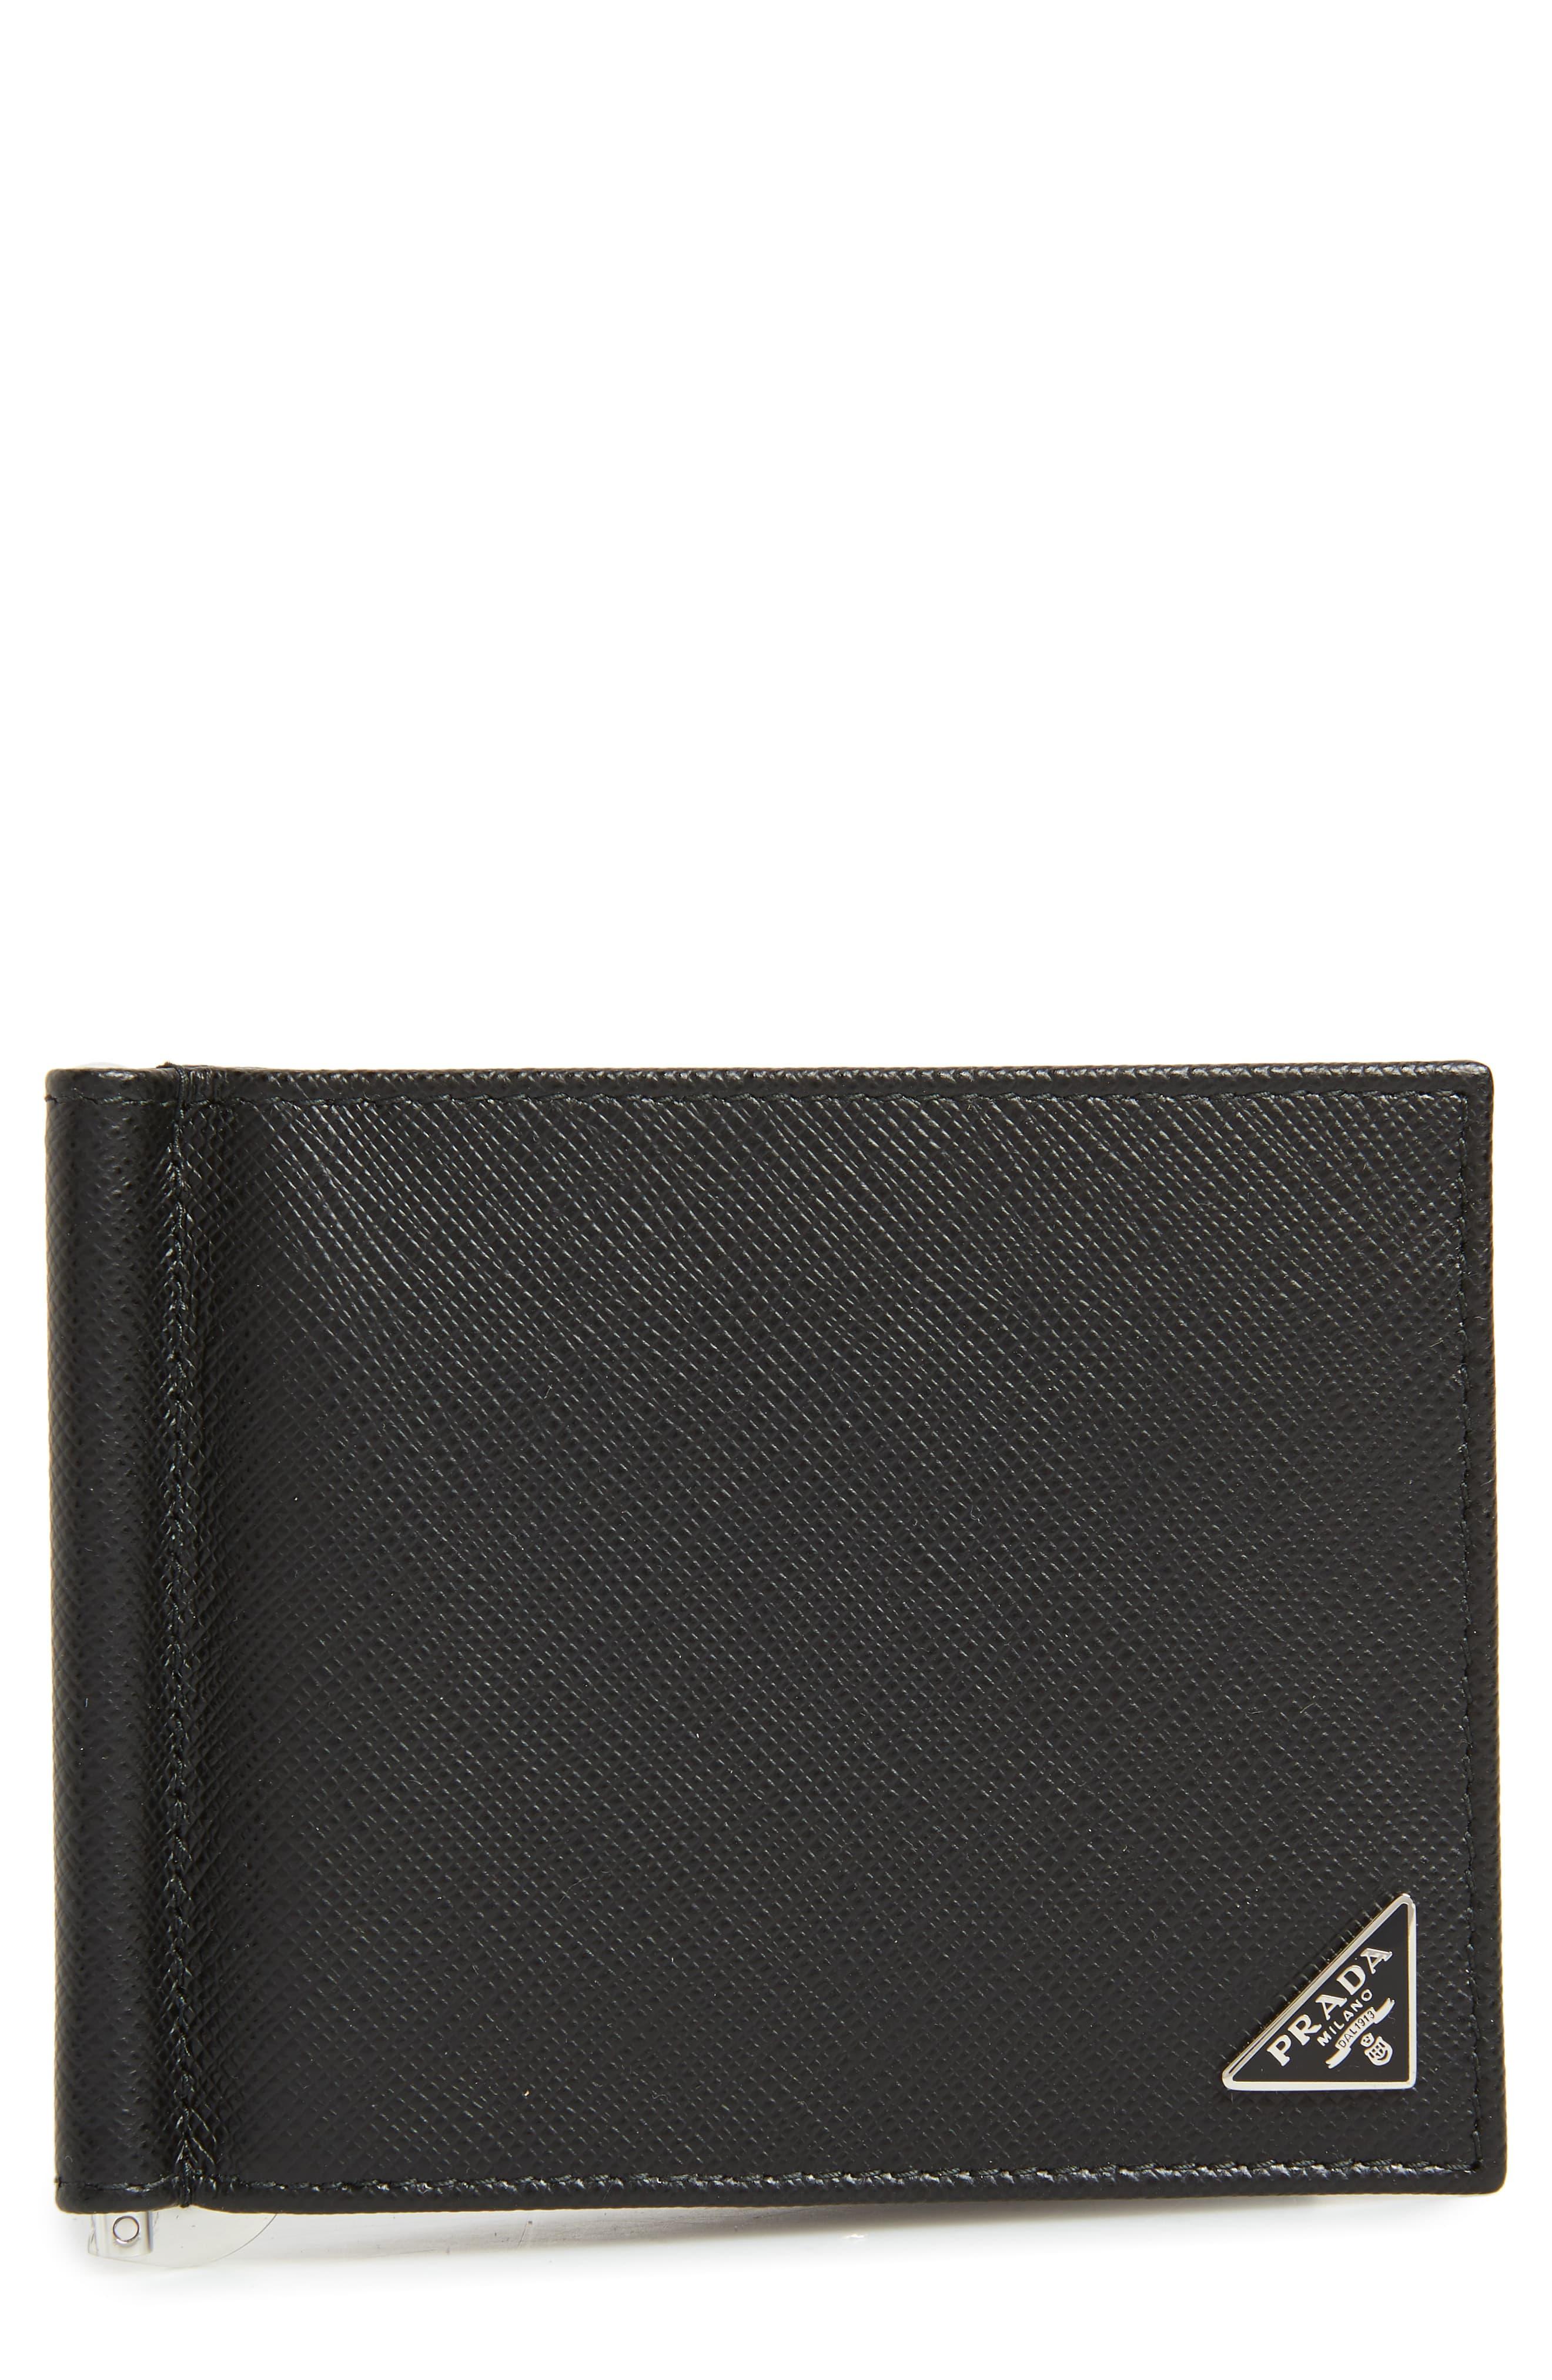 Prada Saffiano Leather Money Clip Wallet in Black for Men - Lyst